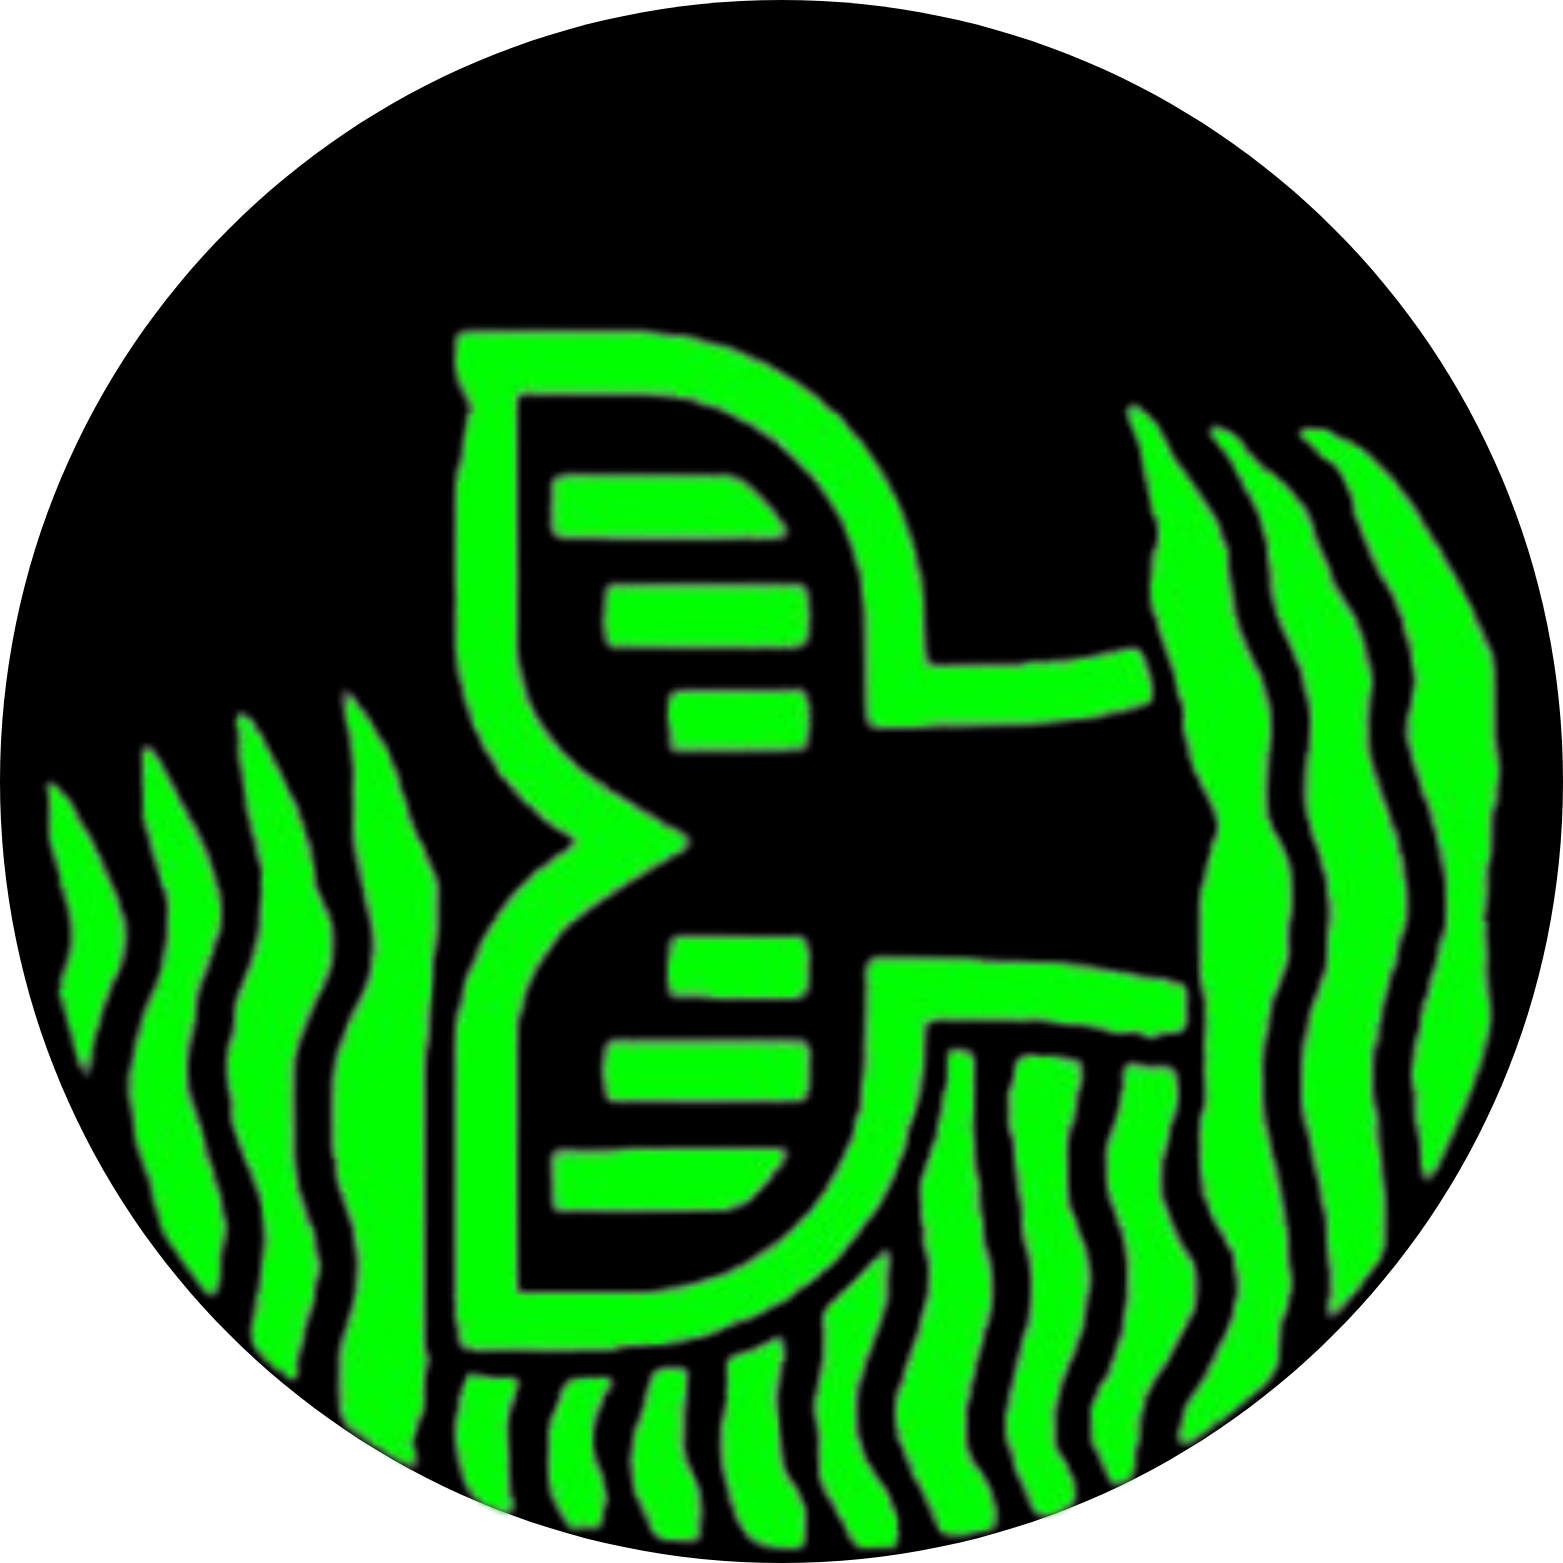 whexdao-logo